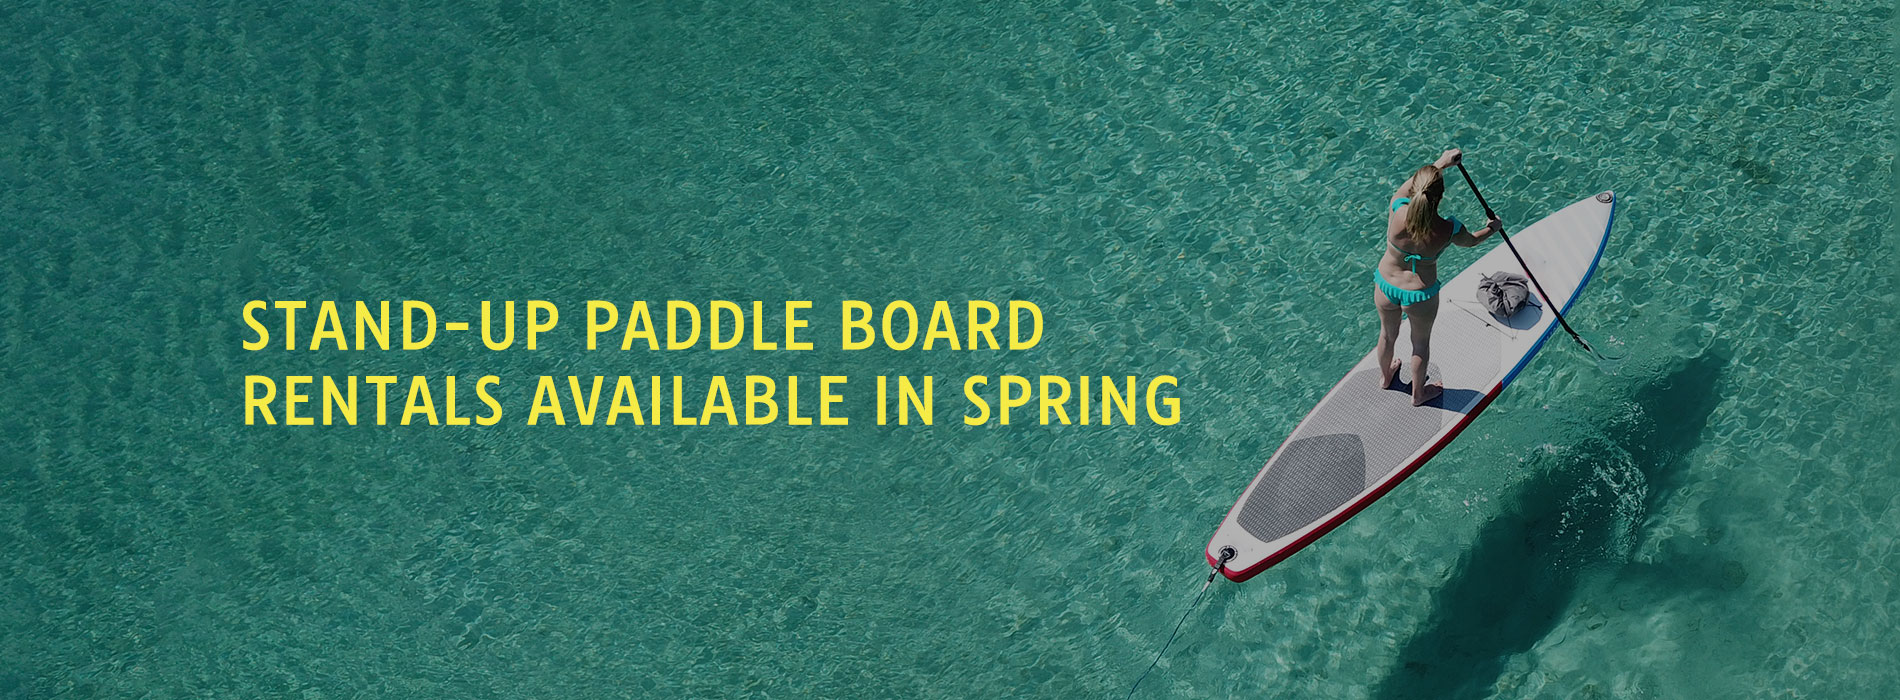 Standup paddleboard promo